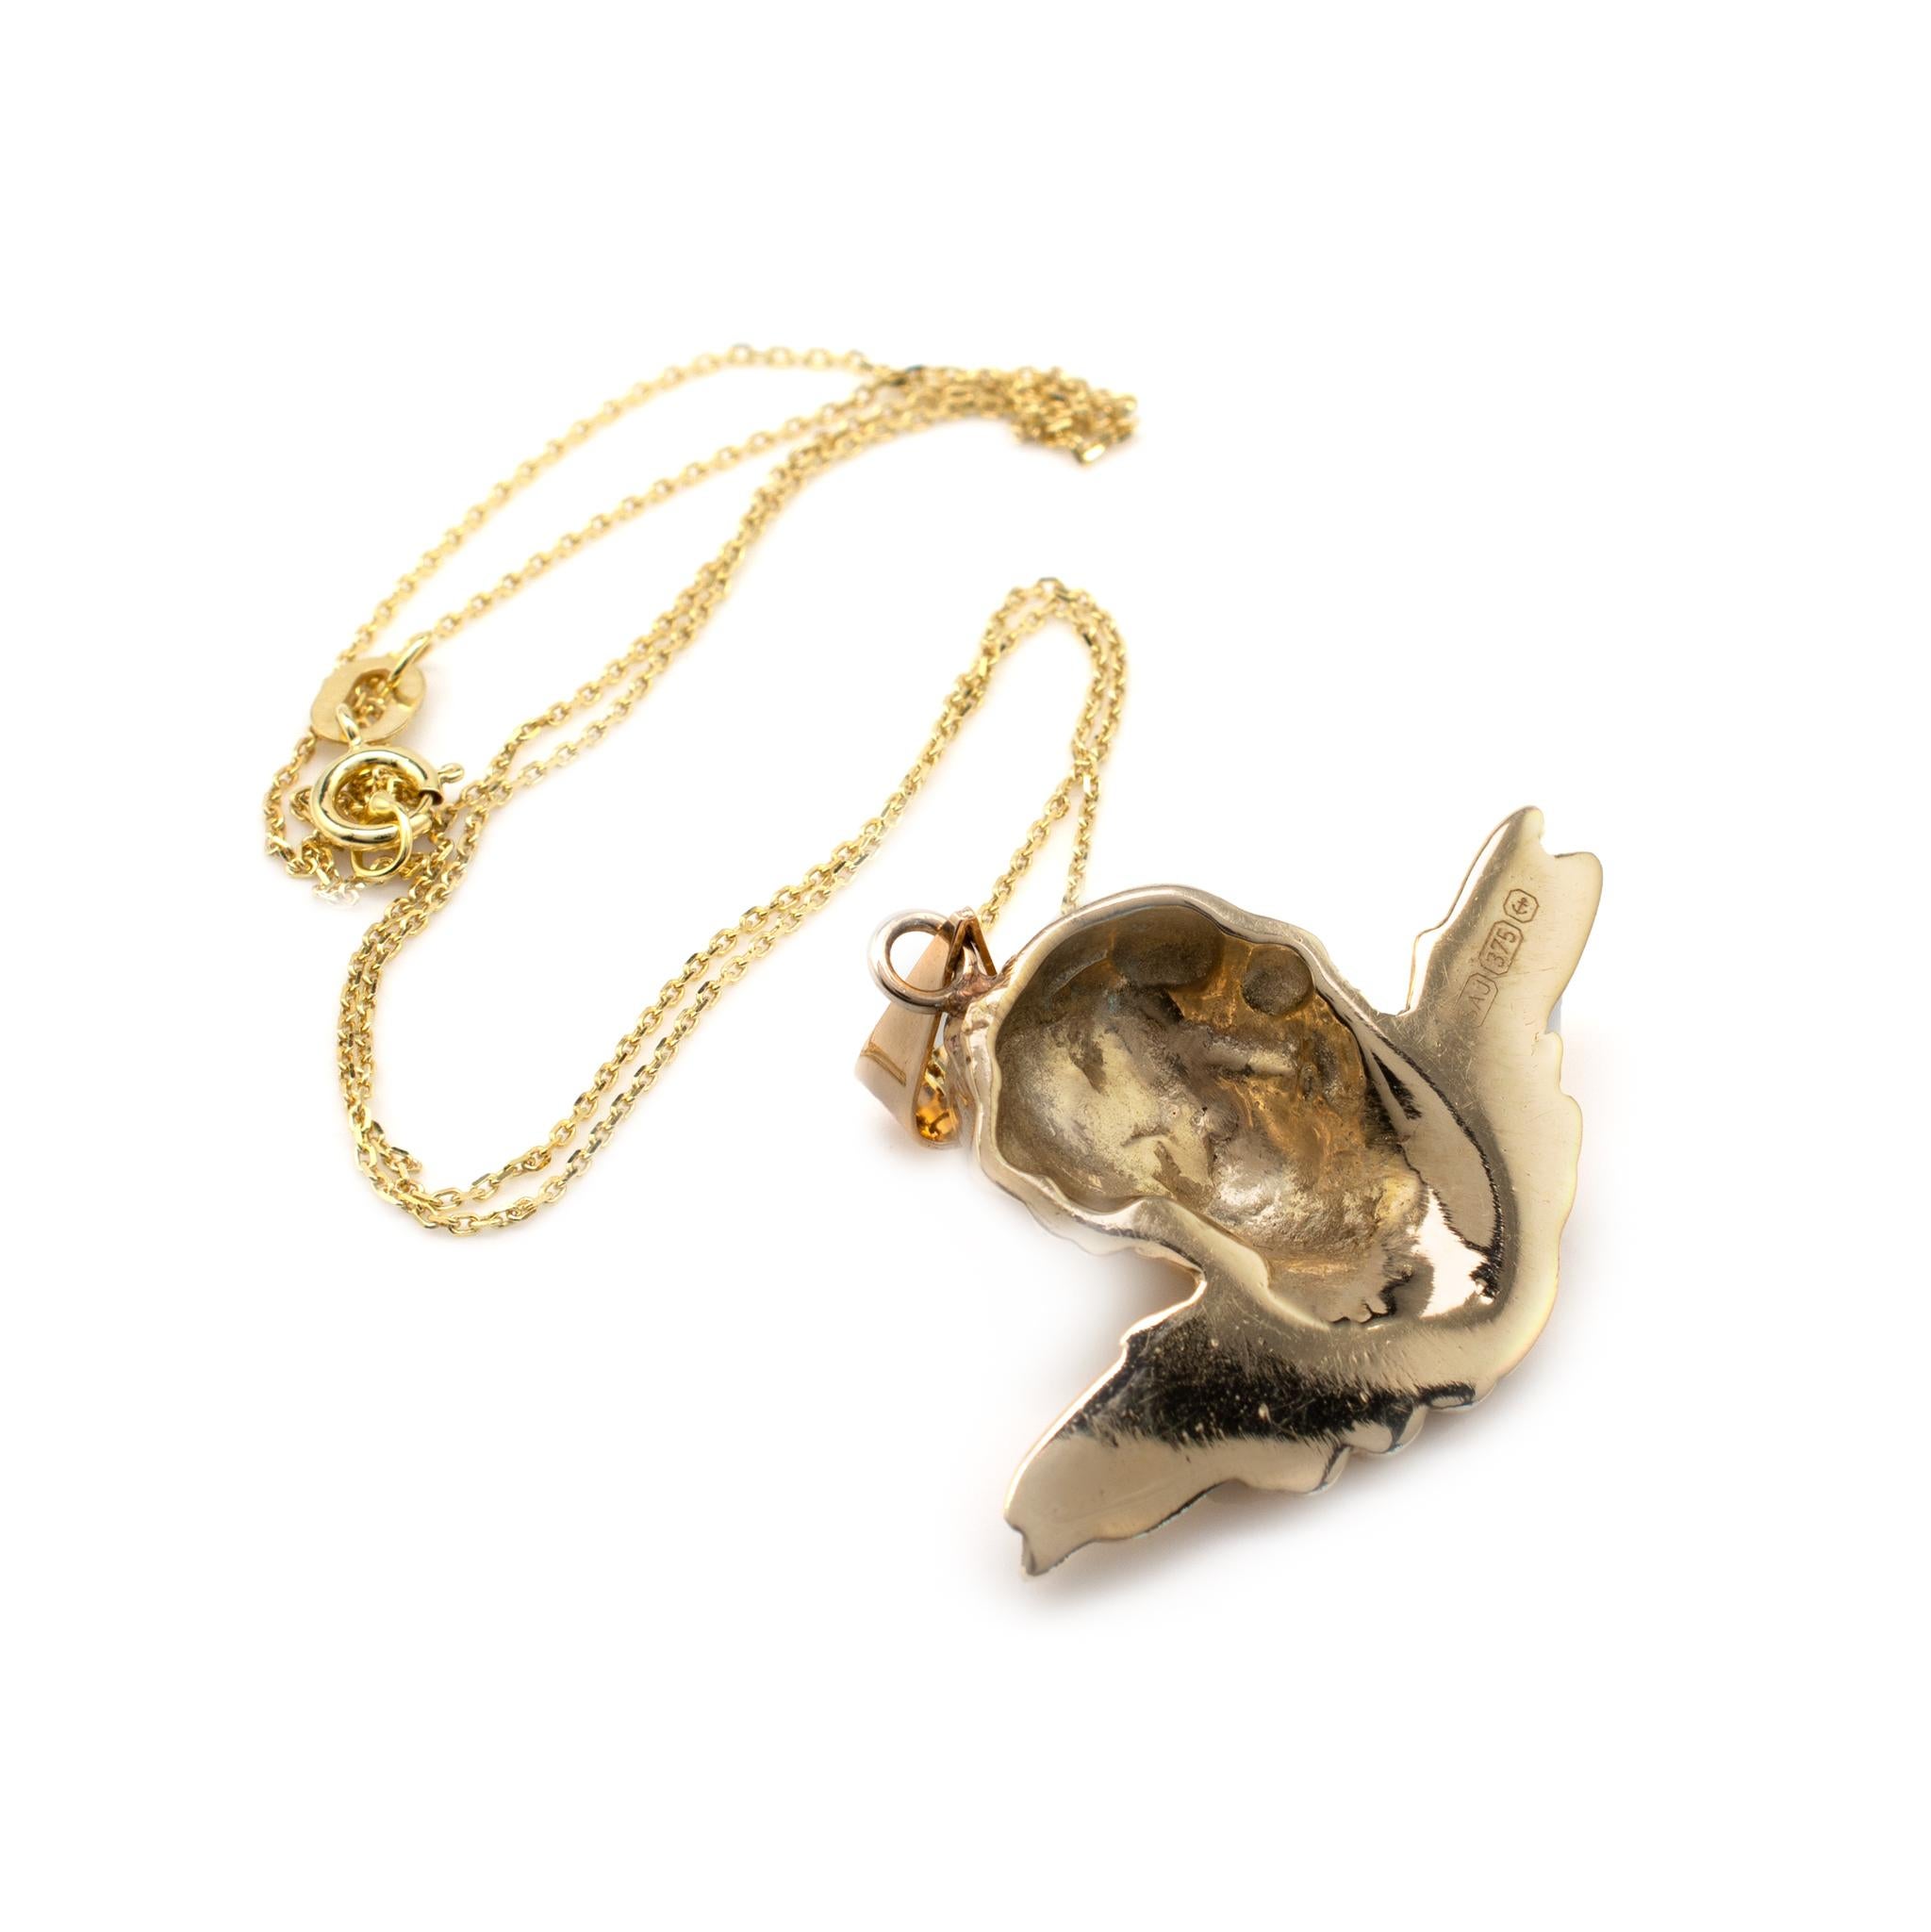 Solid Gold Winged Cherub Pendant Necklace, Mythological & Religious Jewelry 1